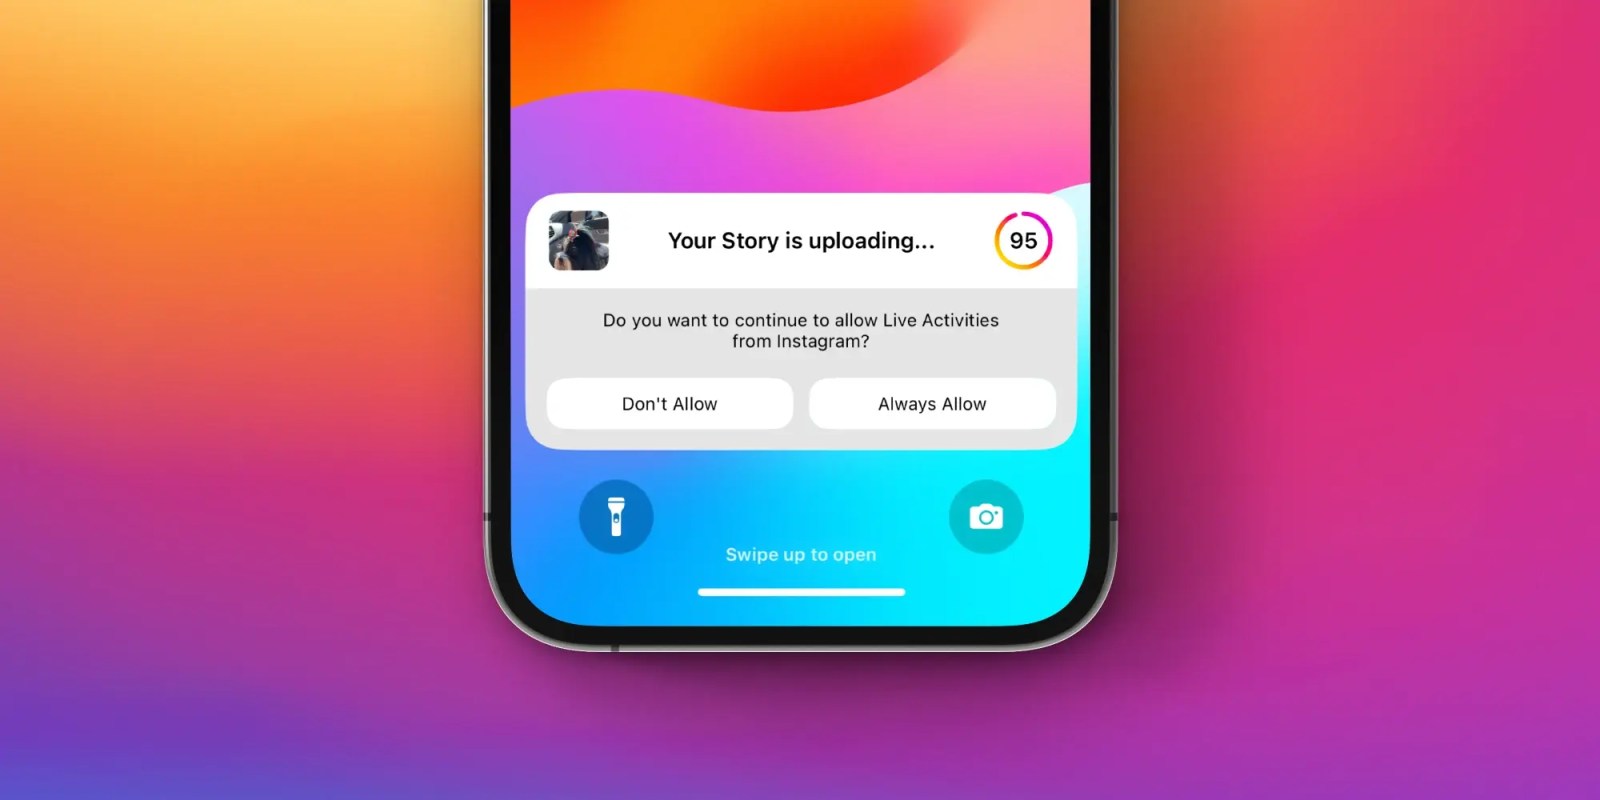 Instagram testing Live Activities in its iPhone app to show upload progress in background